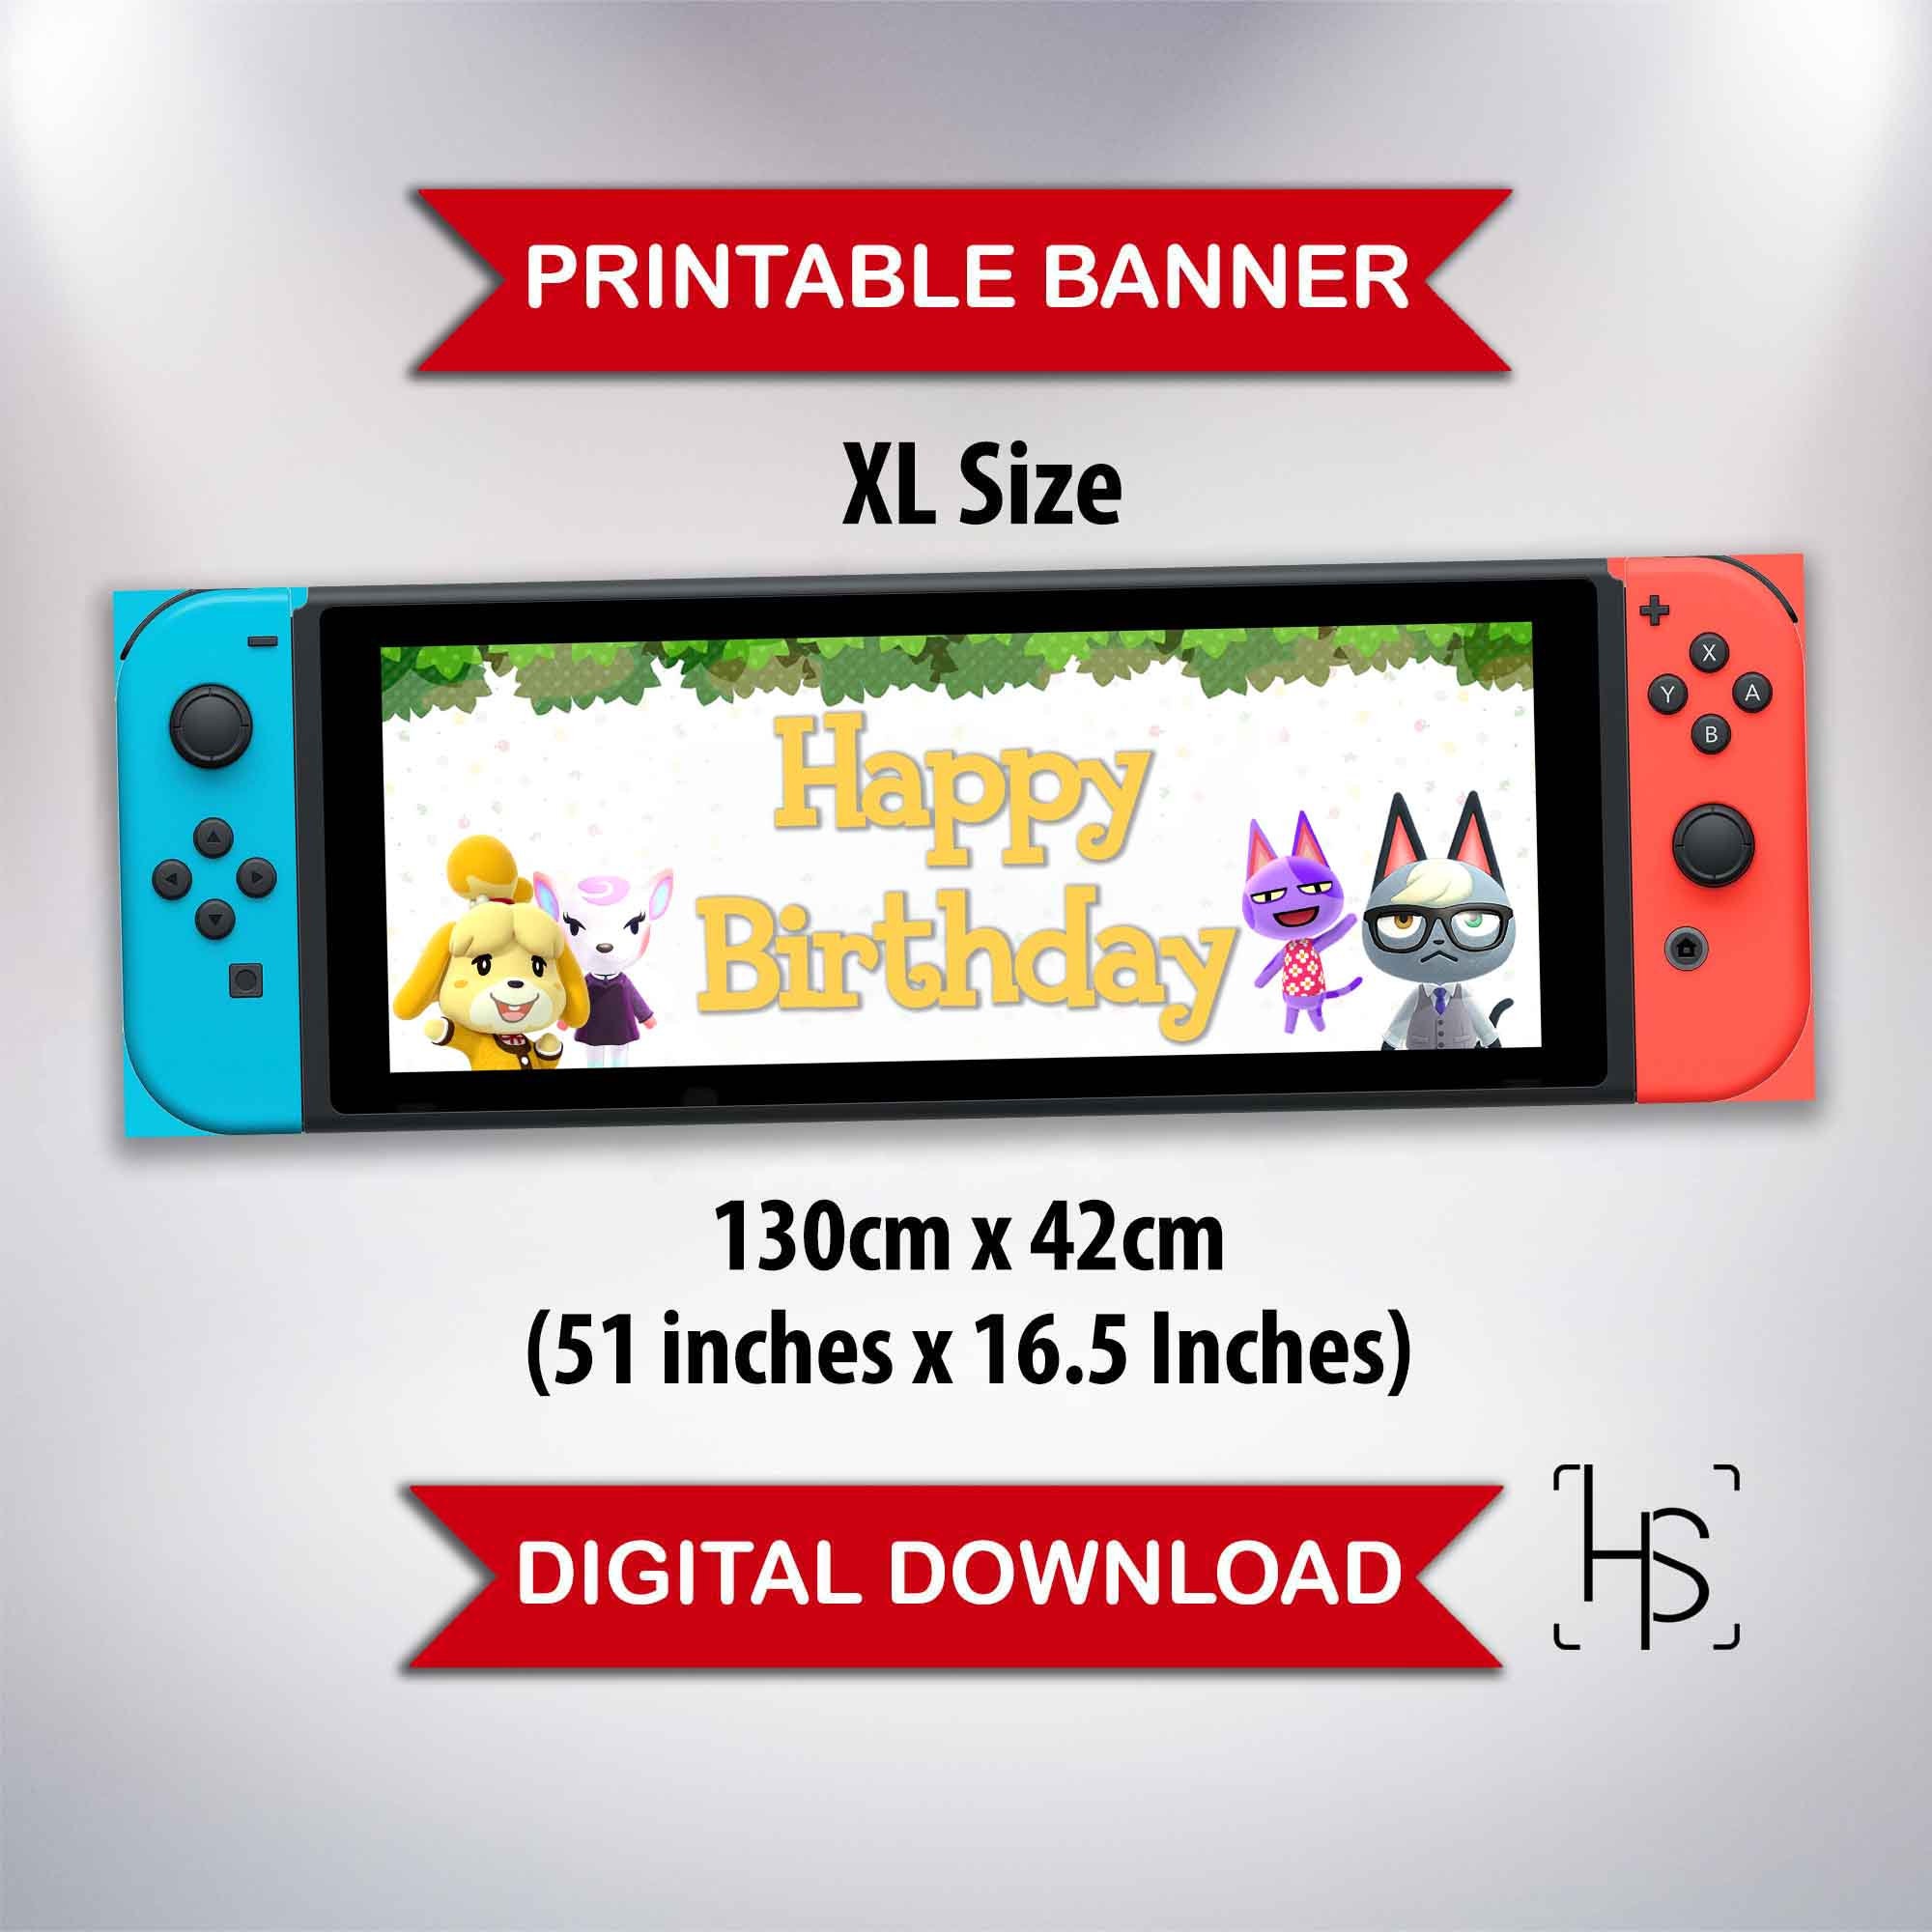 XL Nintendo Switch Animal Crossing Digital Download Banner Online in India